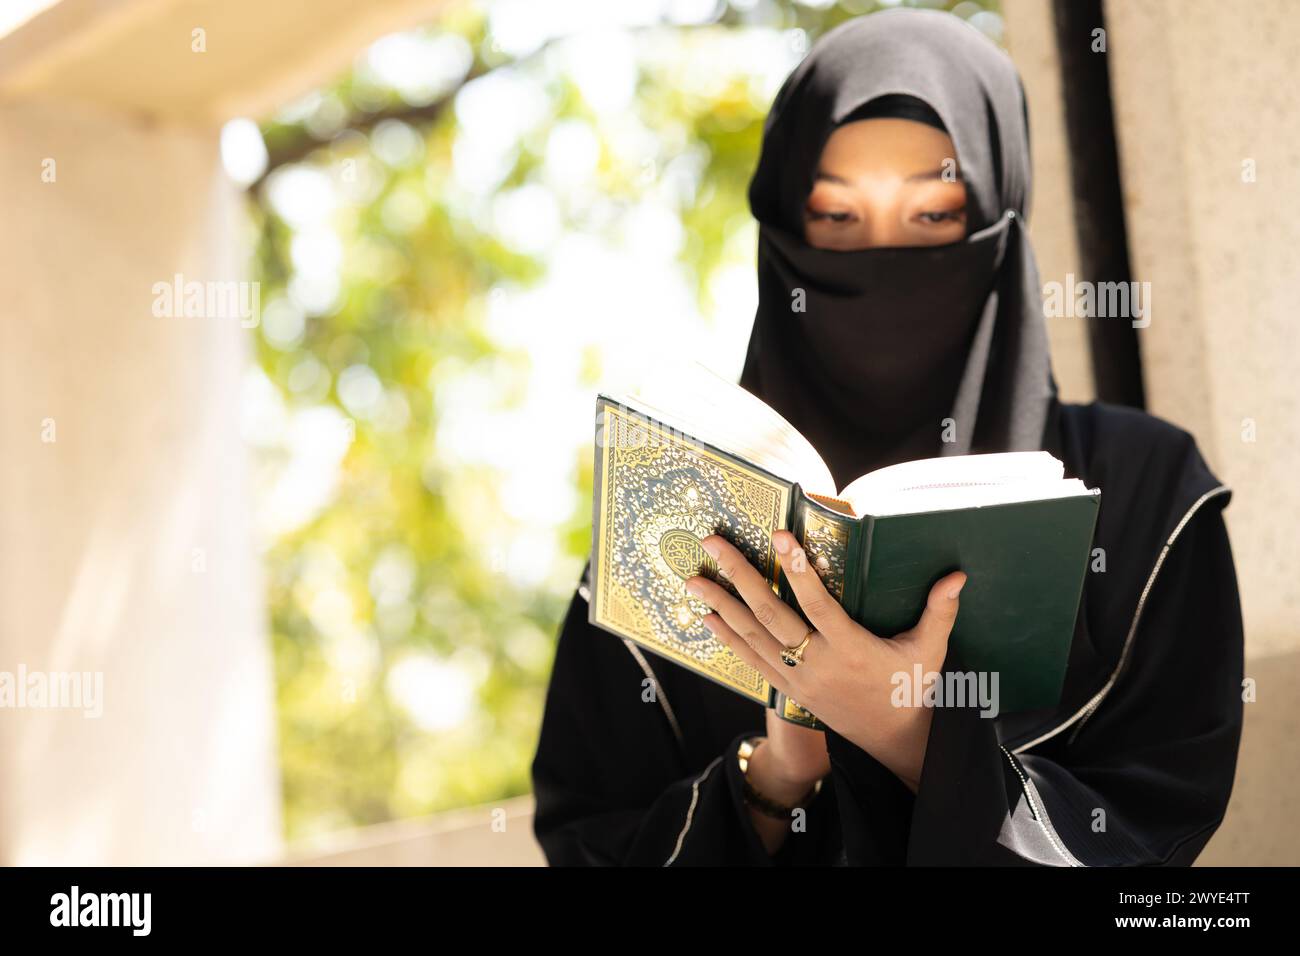 Muslim niqab woman read and learning the Quran and faith The Holy Al Quran book. Arab saudi black chador lady. Stock Photo